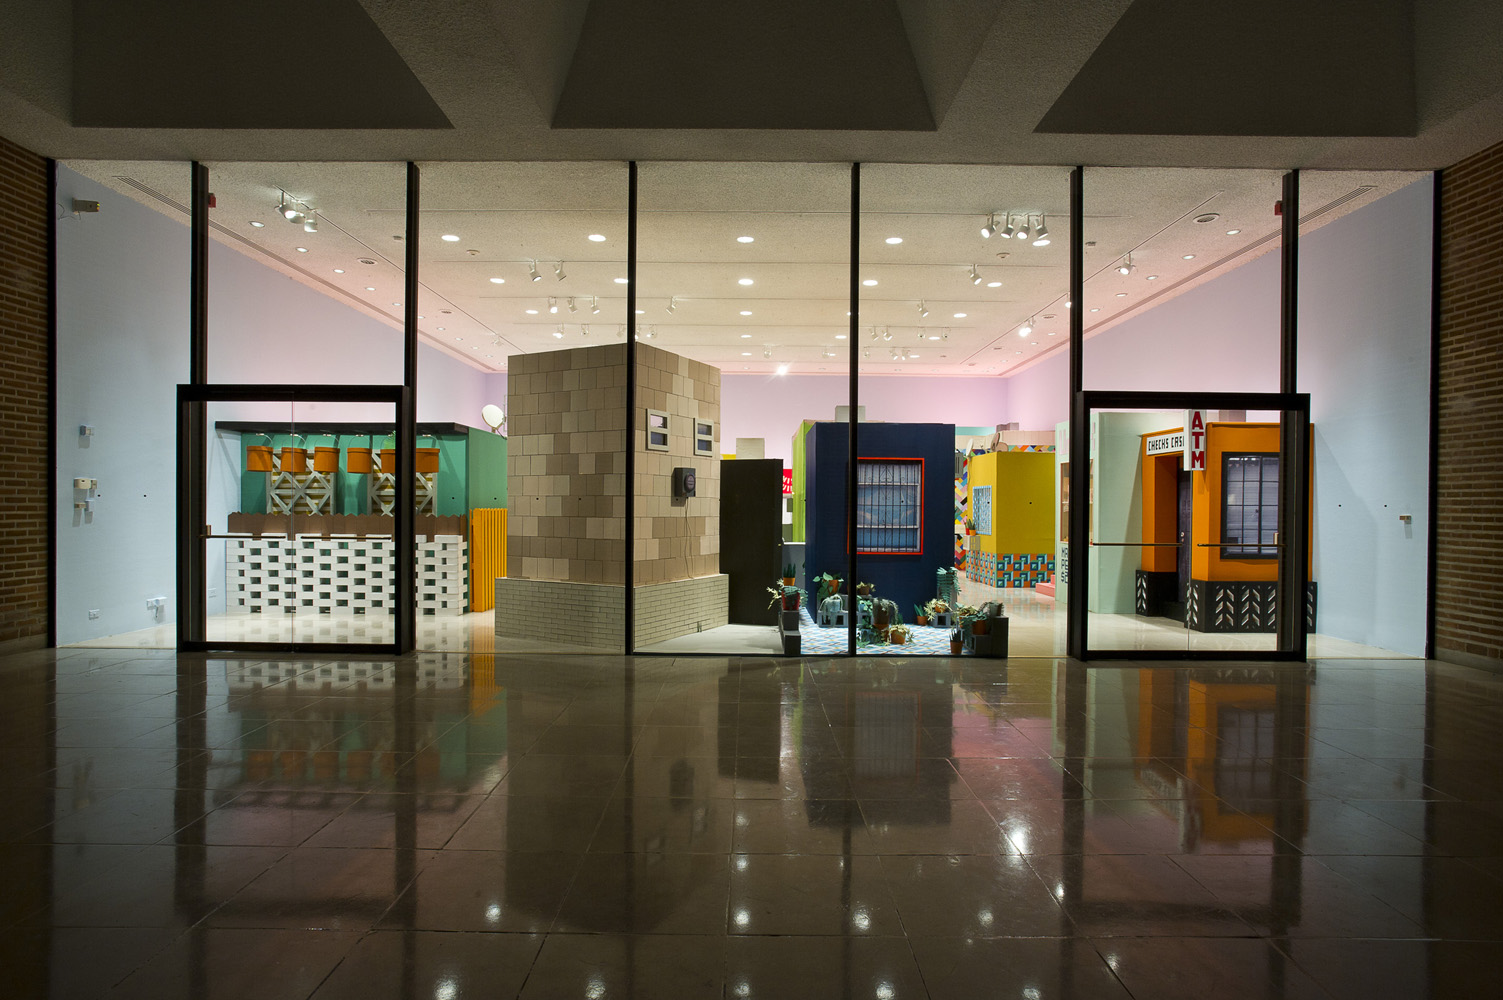 Salon of Beauty (installation view), 2011